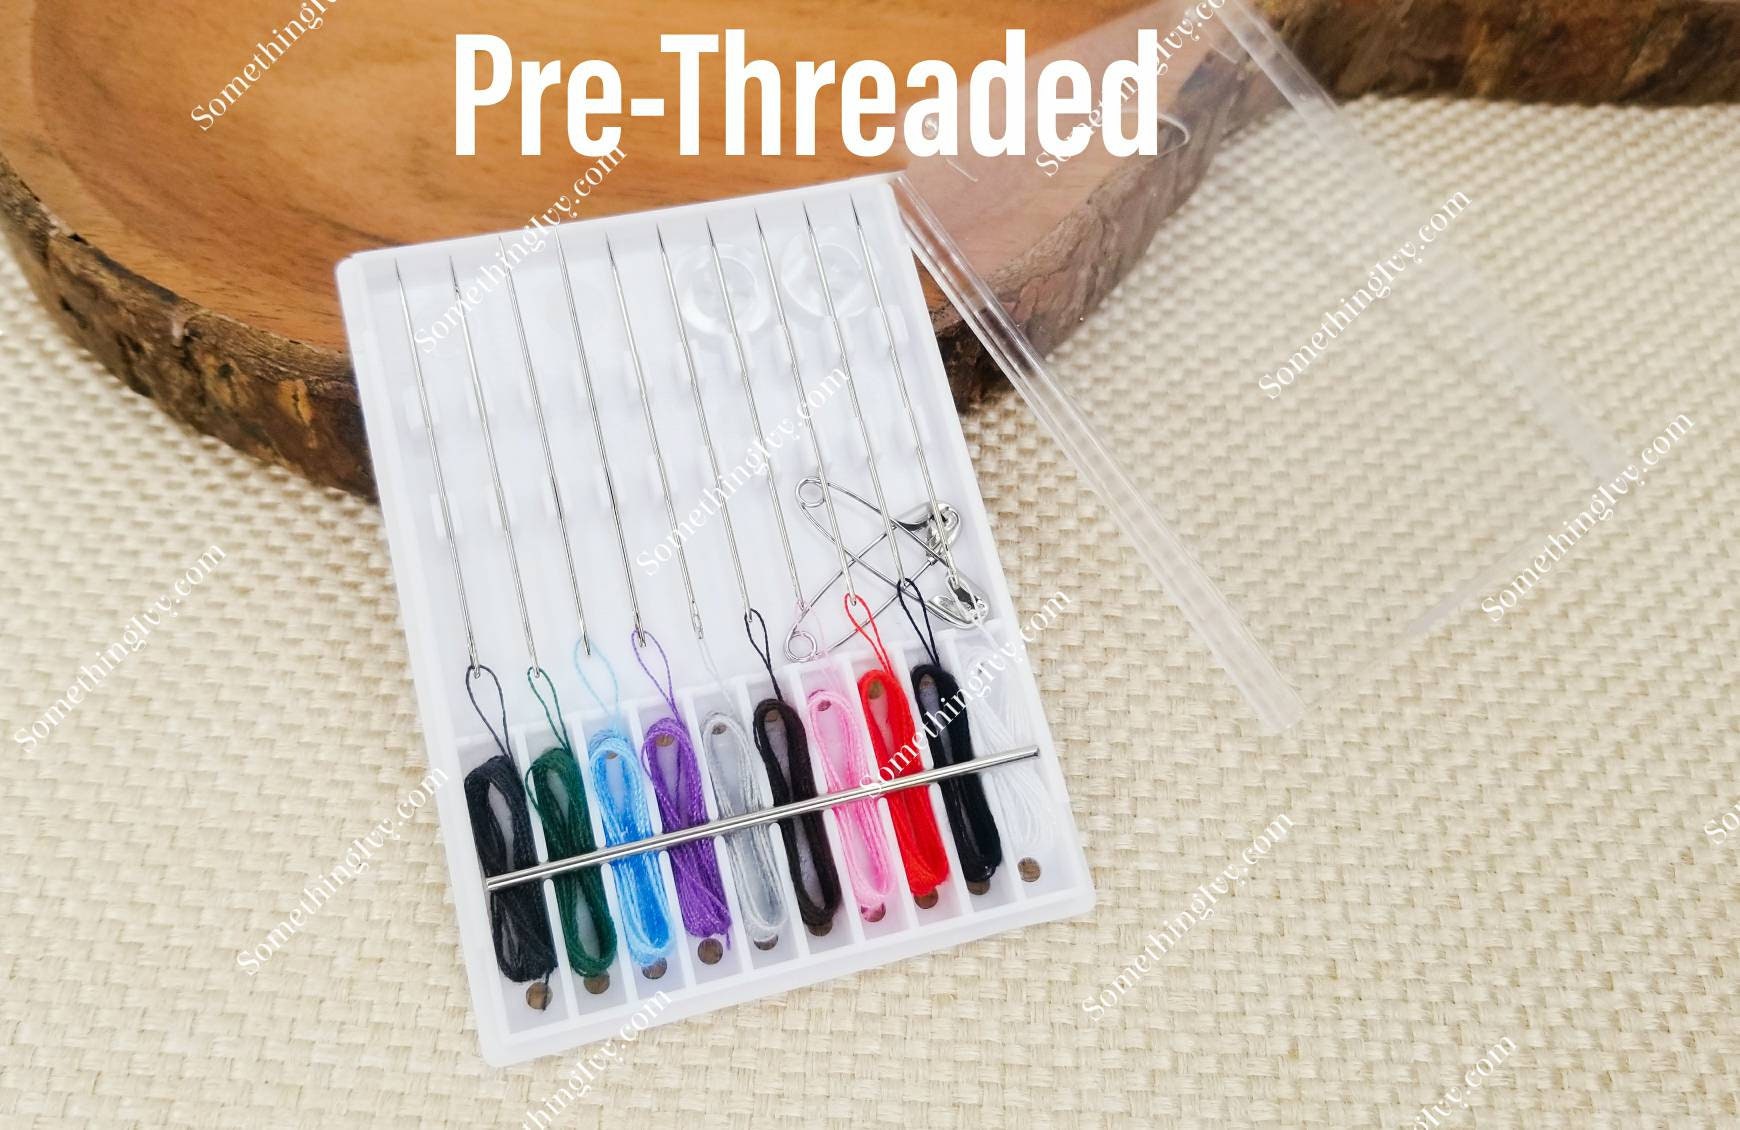  SUPVOX 10Pcs Pre-Threaded Needle Kit Assorted Colors